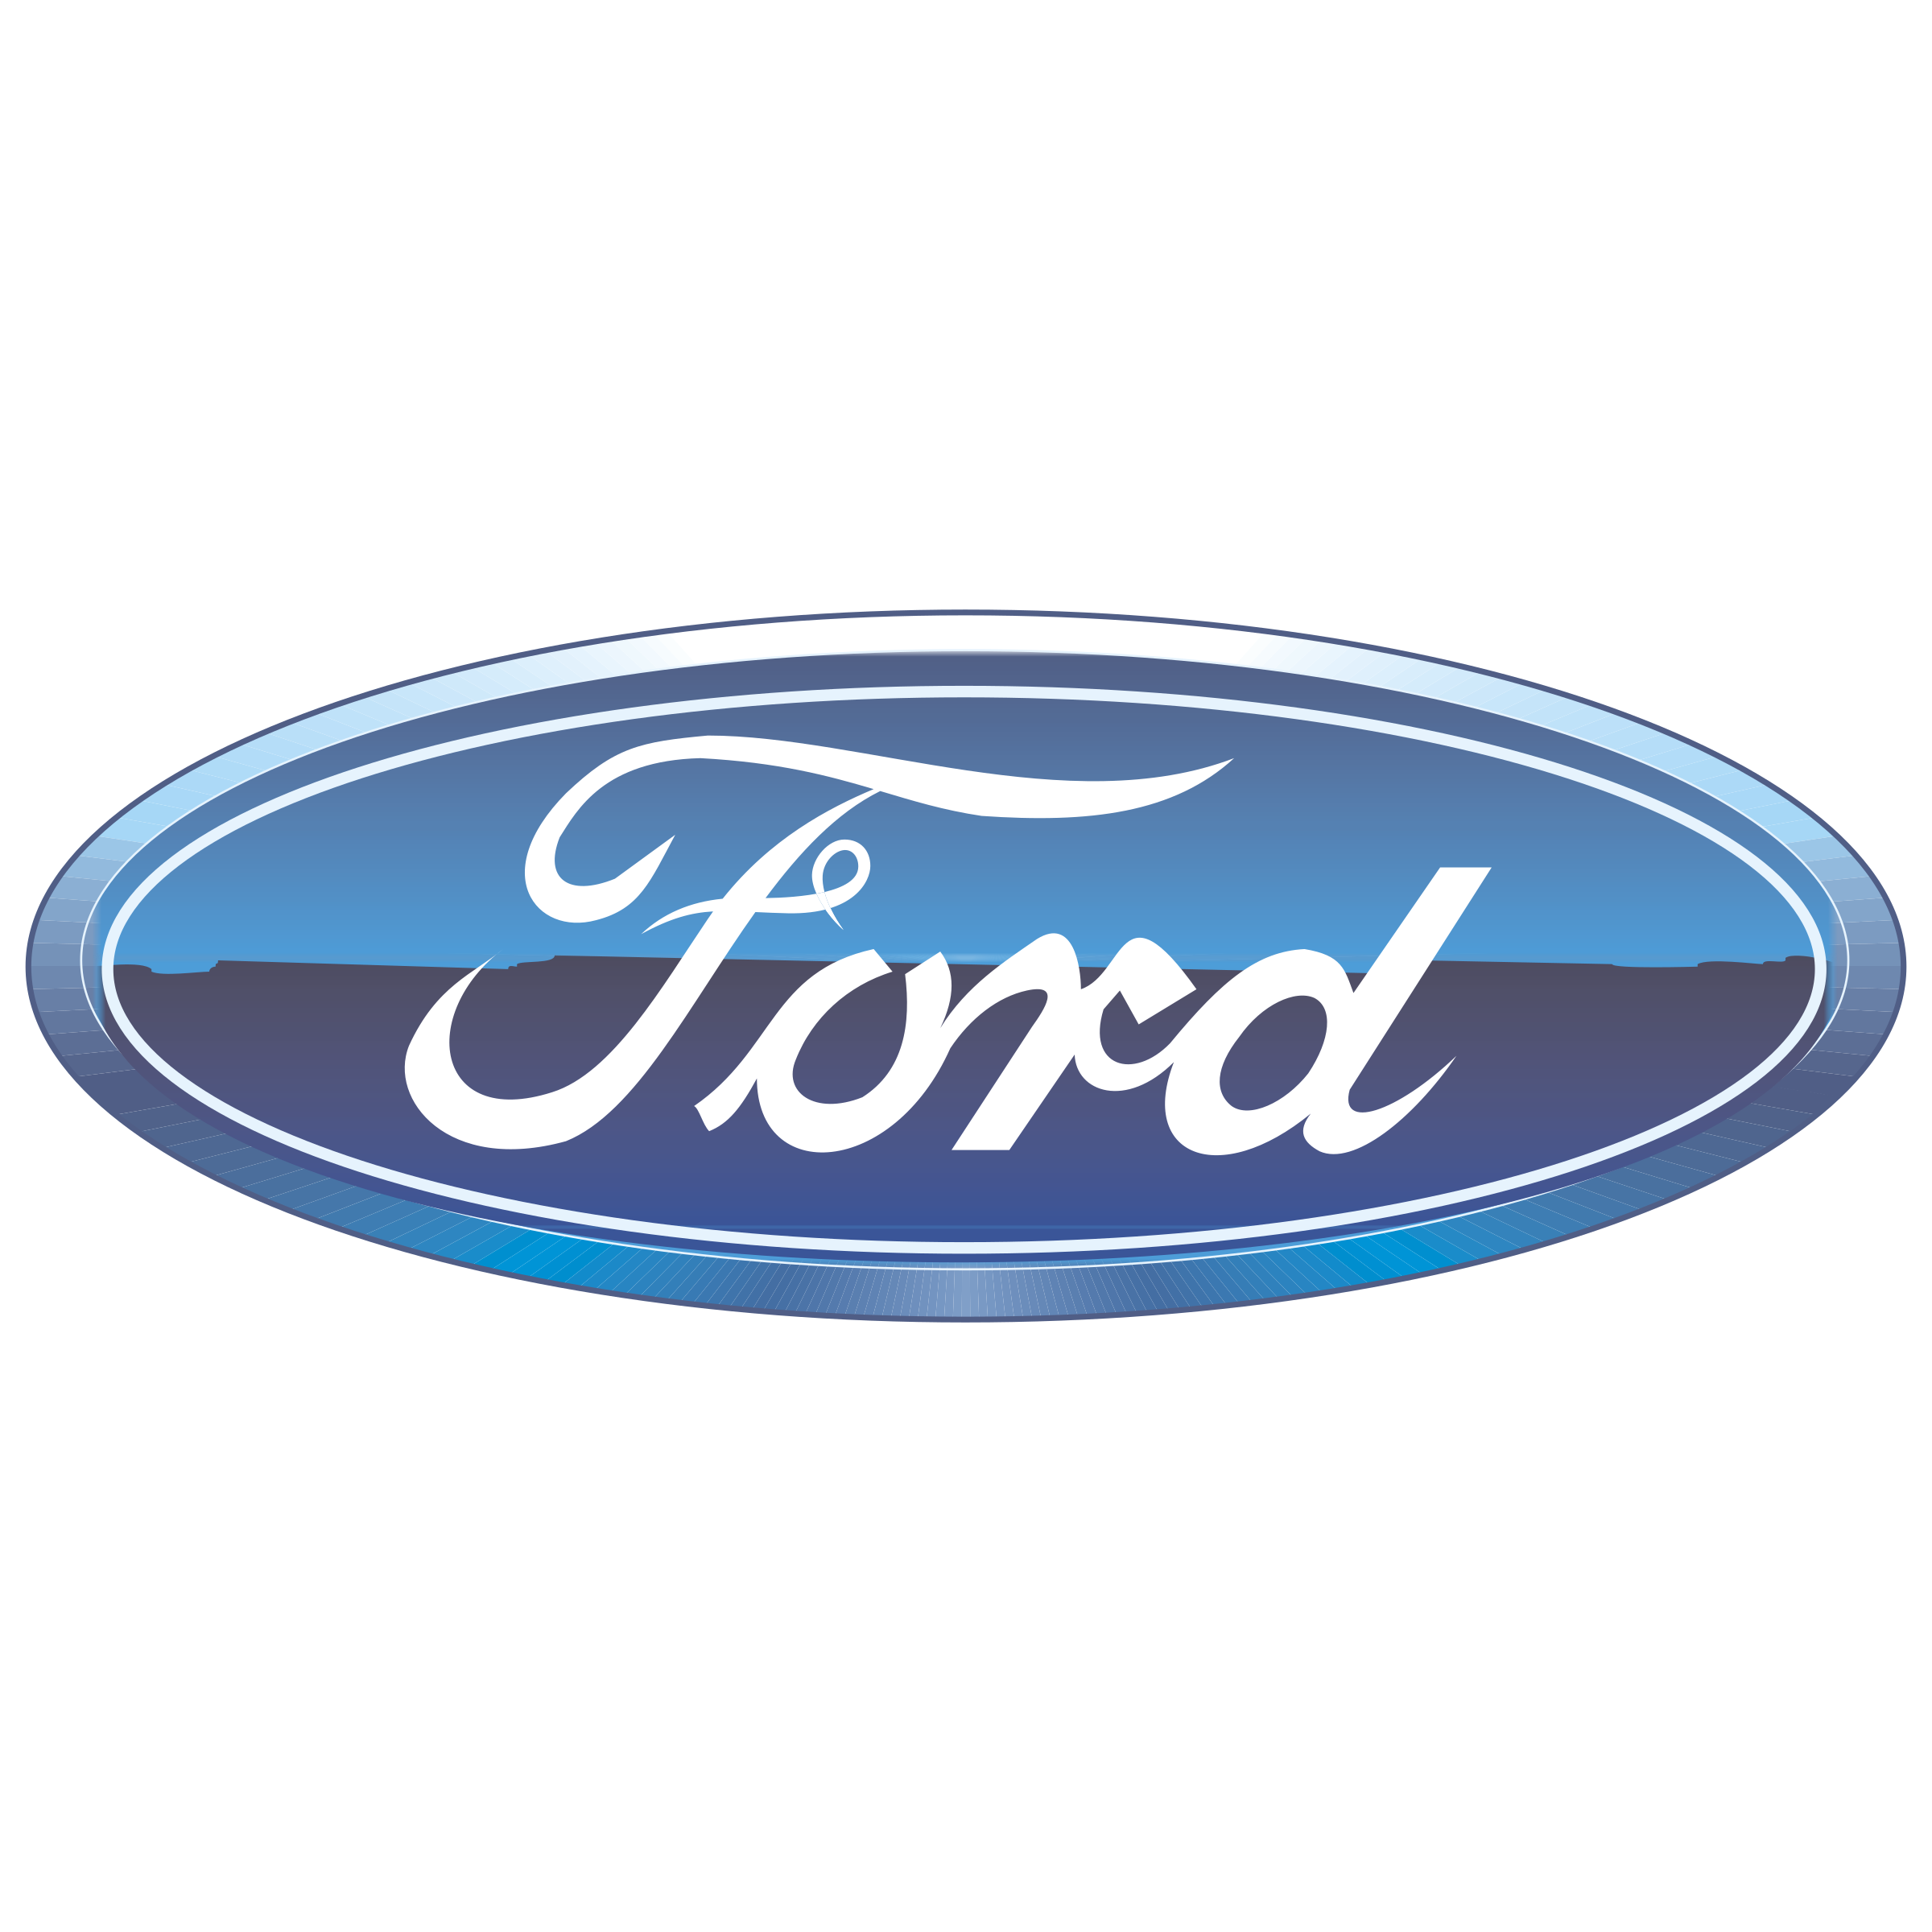 Ford Logo Transparent Png - P